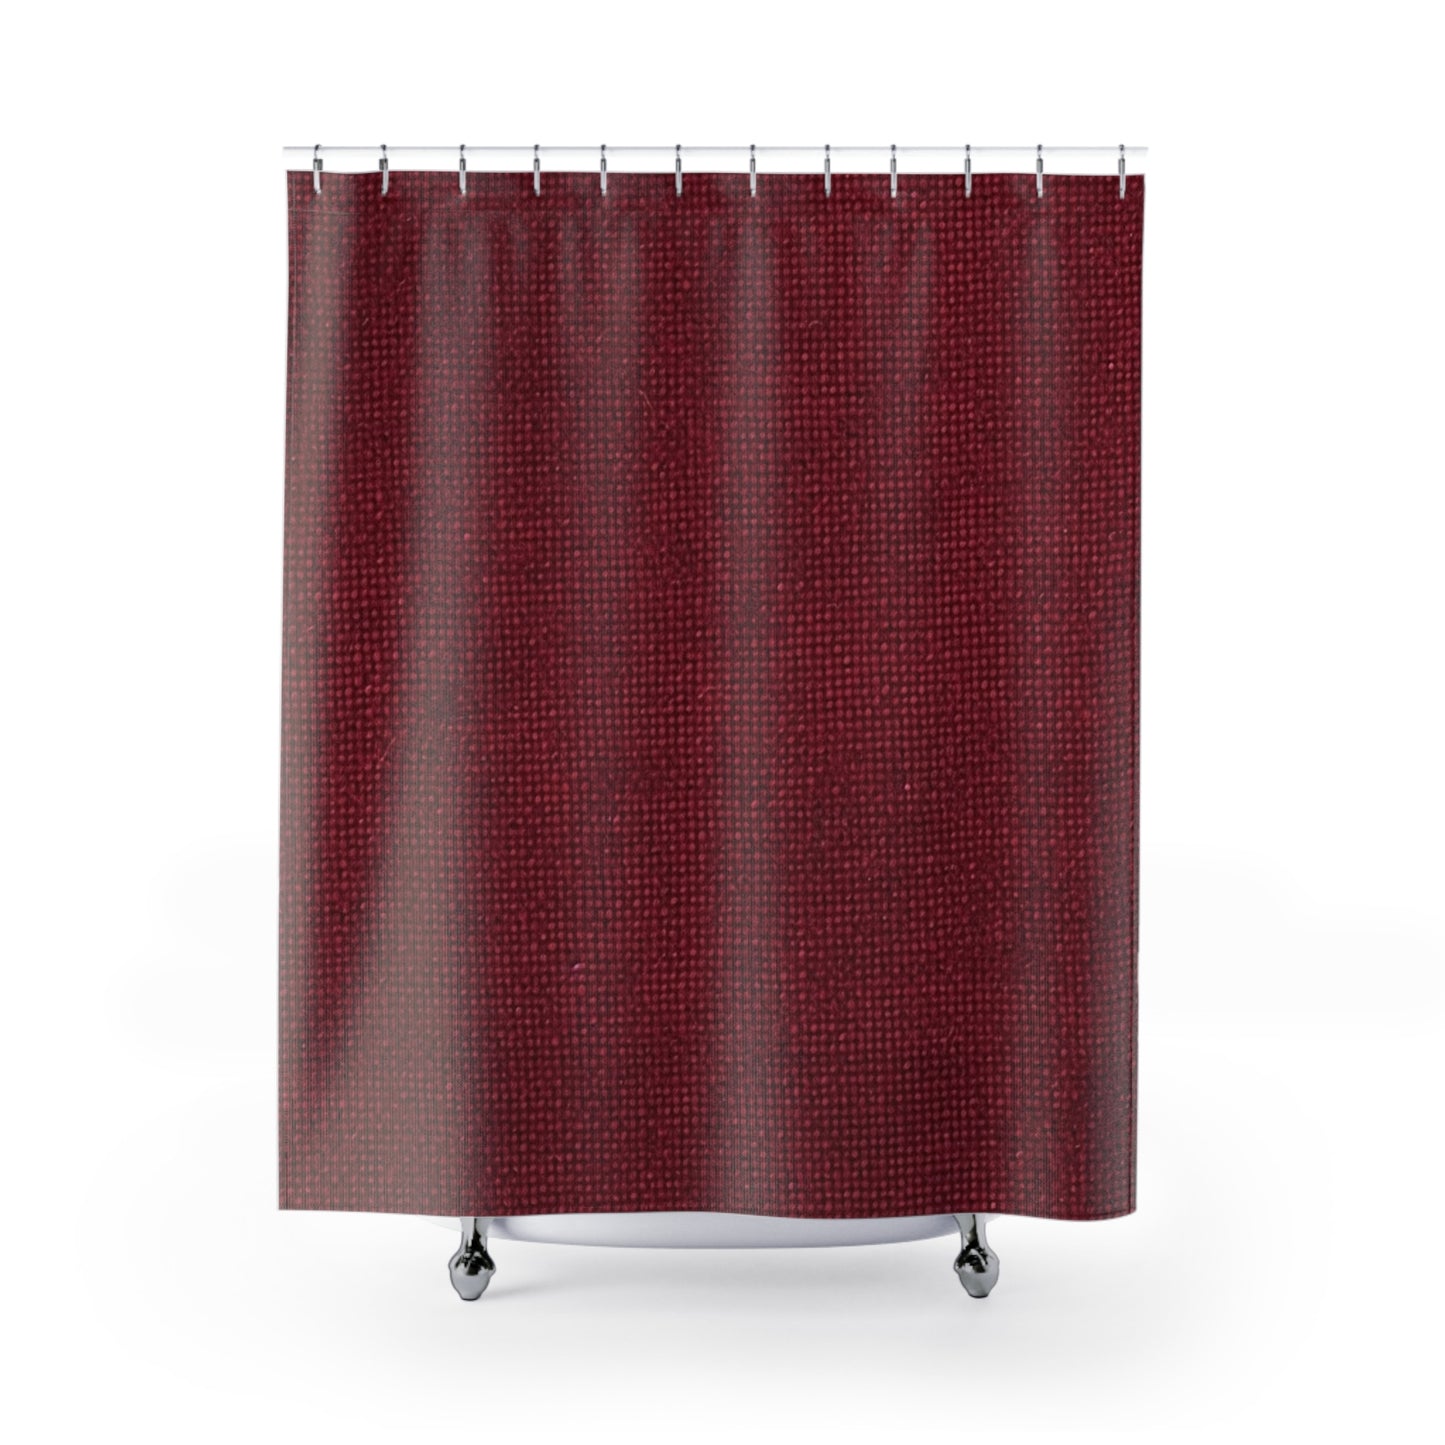 Seamless Texture - Maroon/Burgundy Denim-Inspired Fabric - Shower Curtains